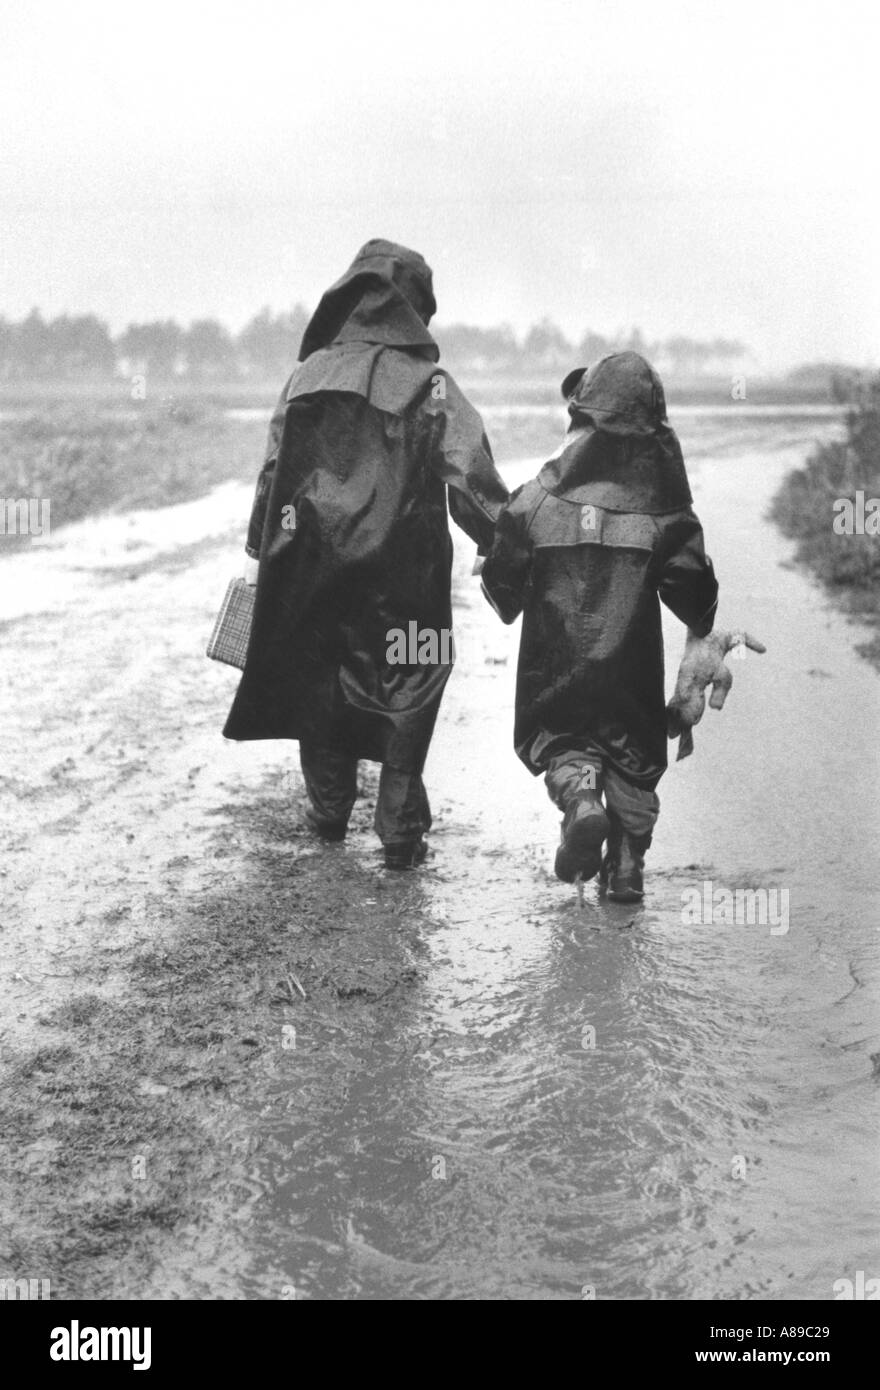 Two children in rain hats and raincoats walking in the rain Stock Photo